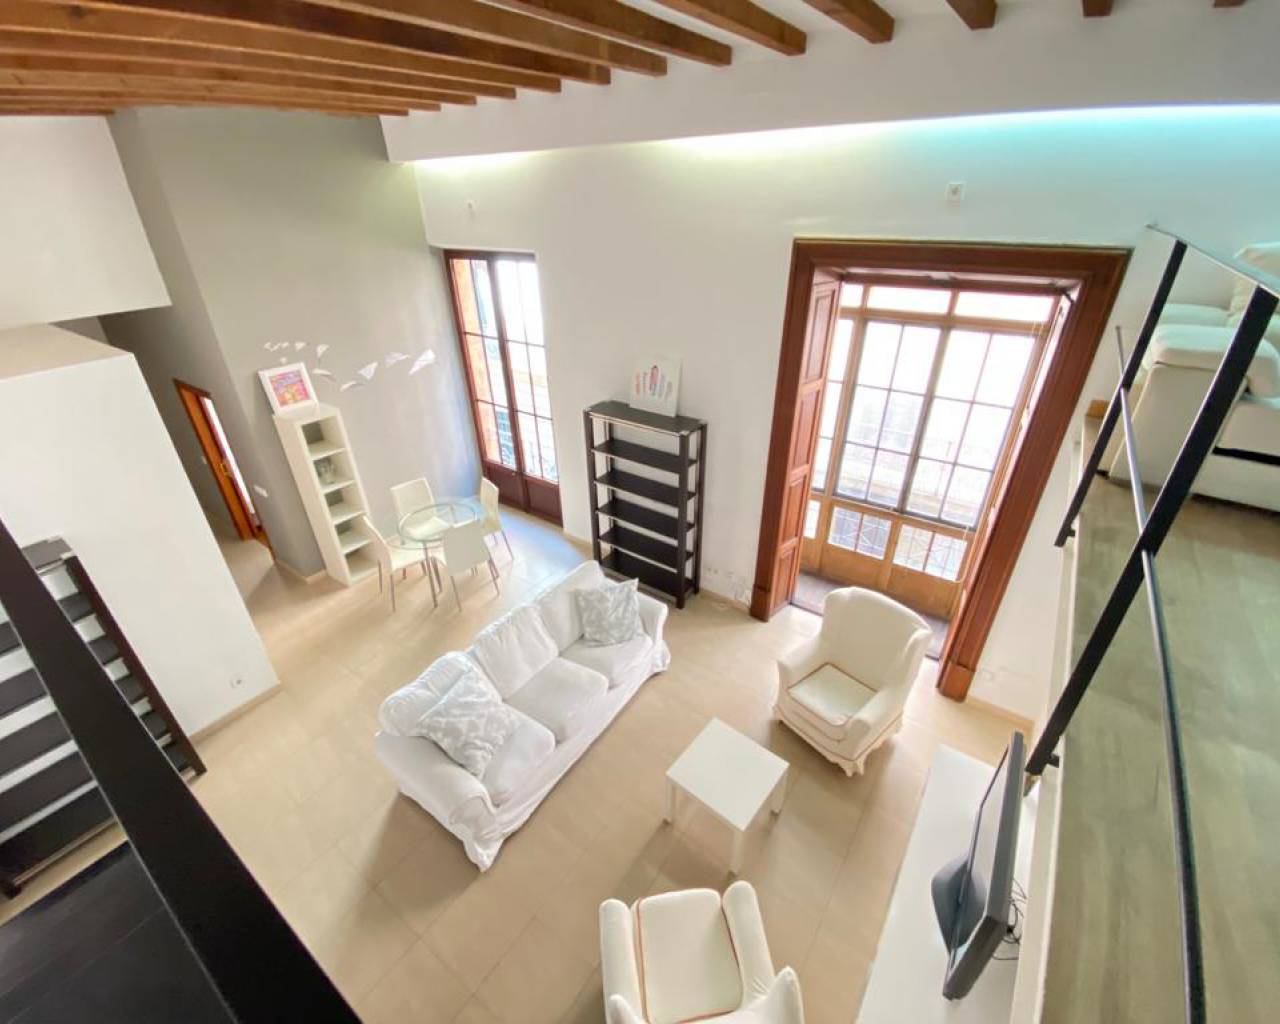 Apartment for rent in Palma de Mallorca